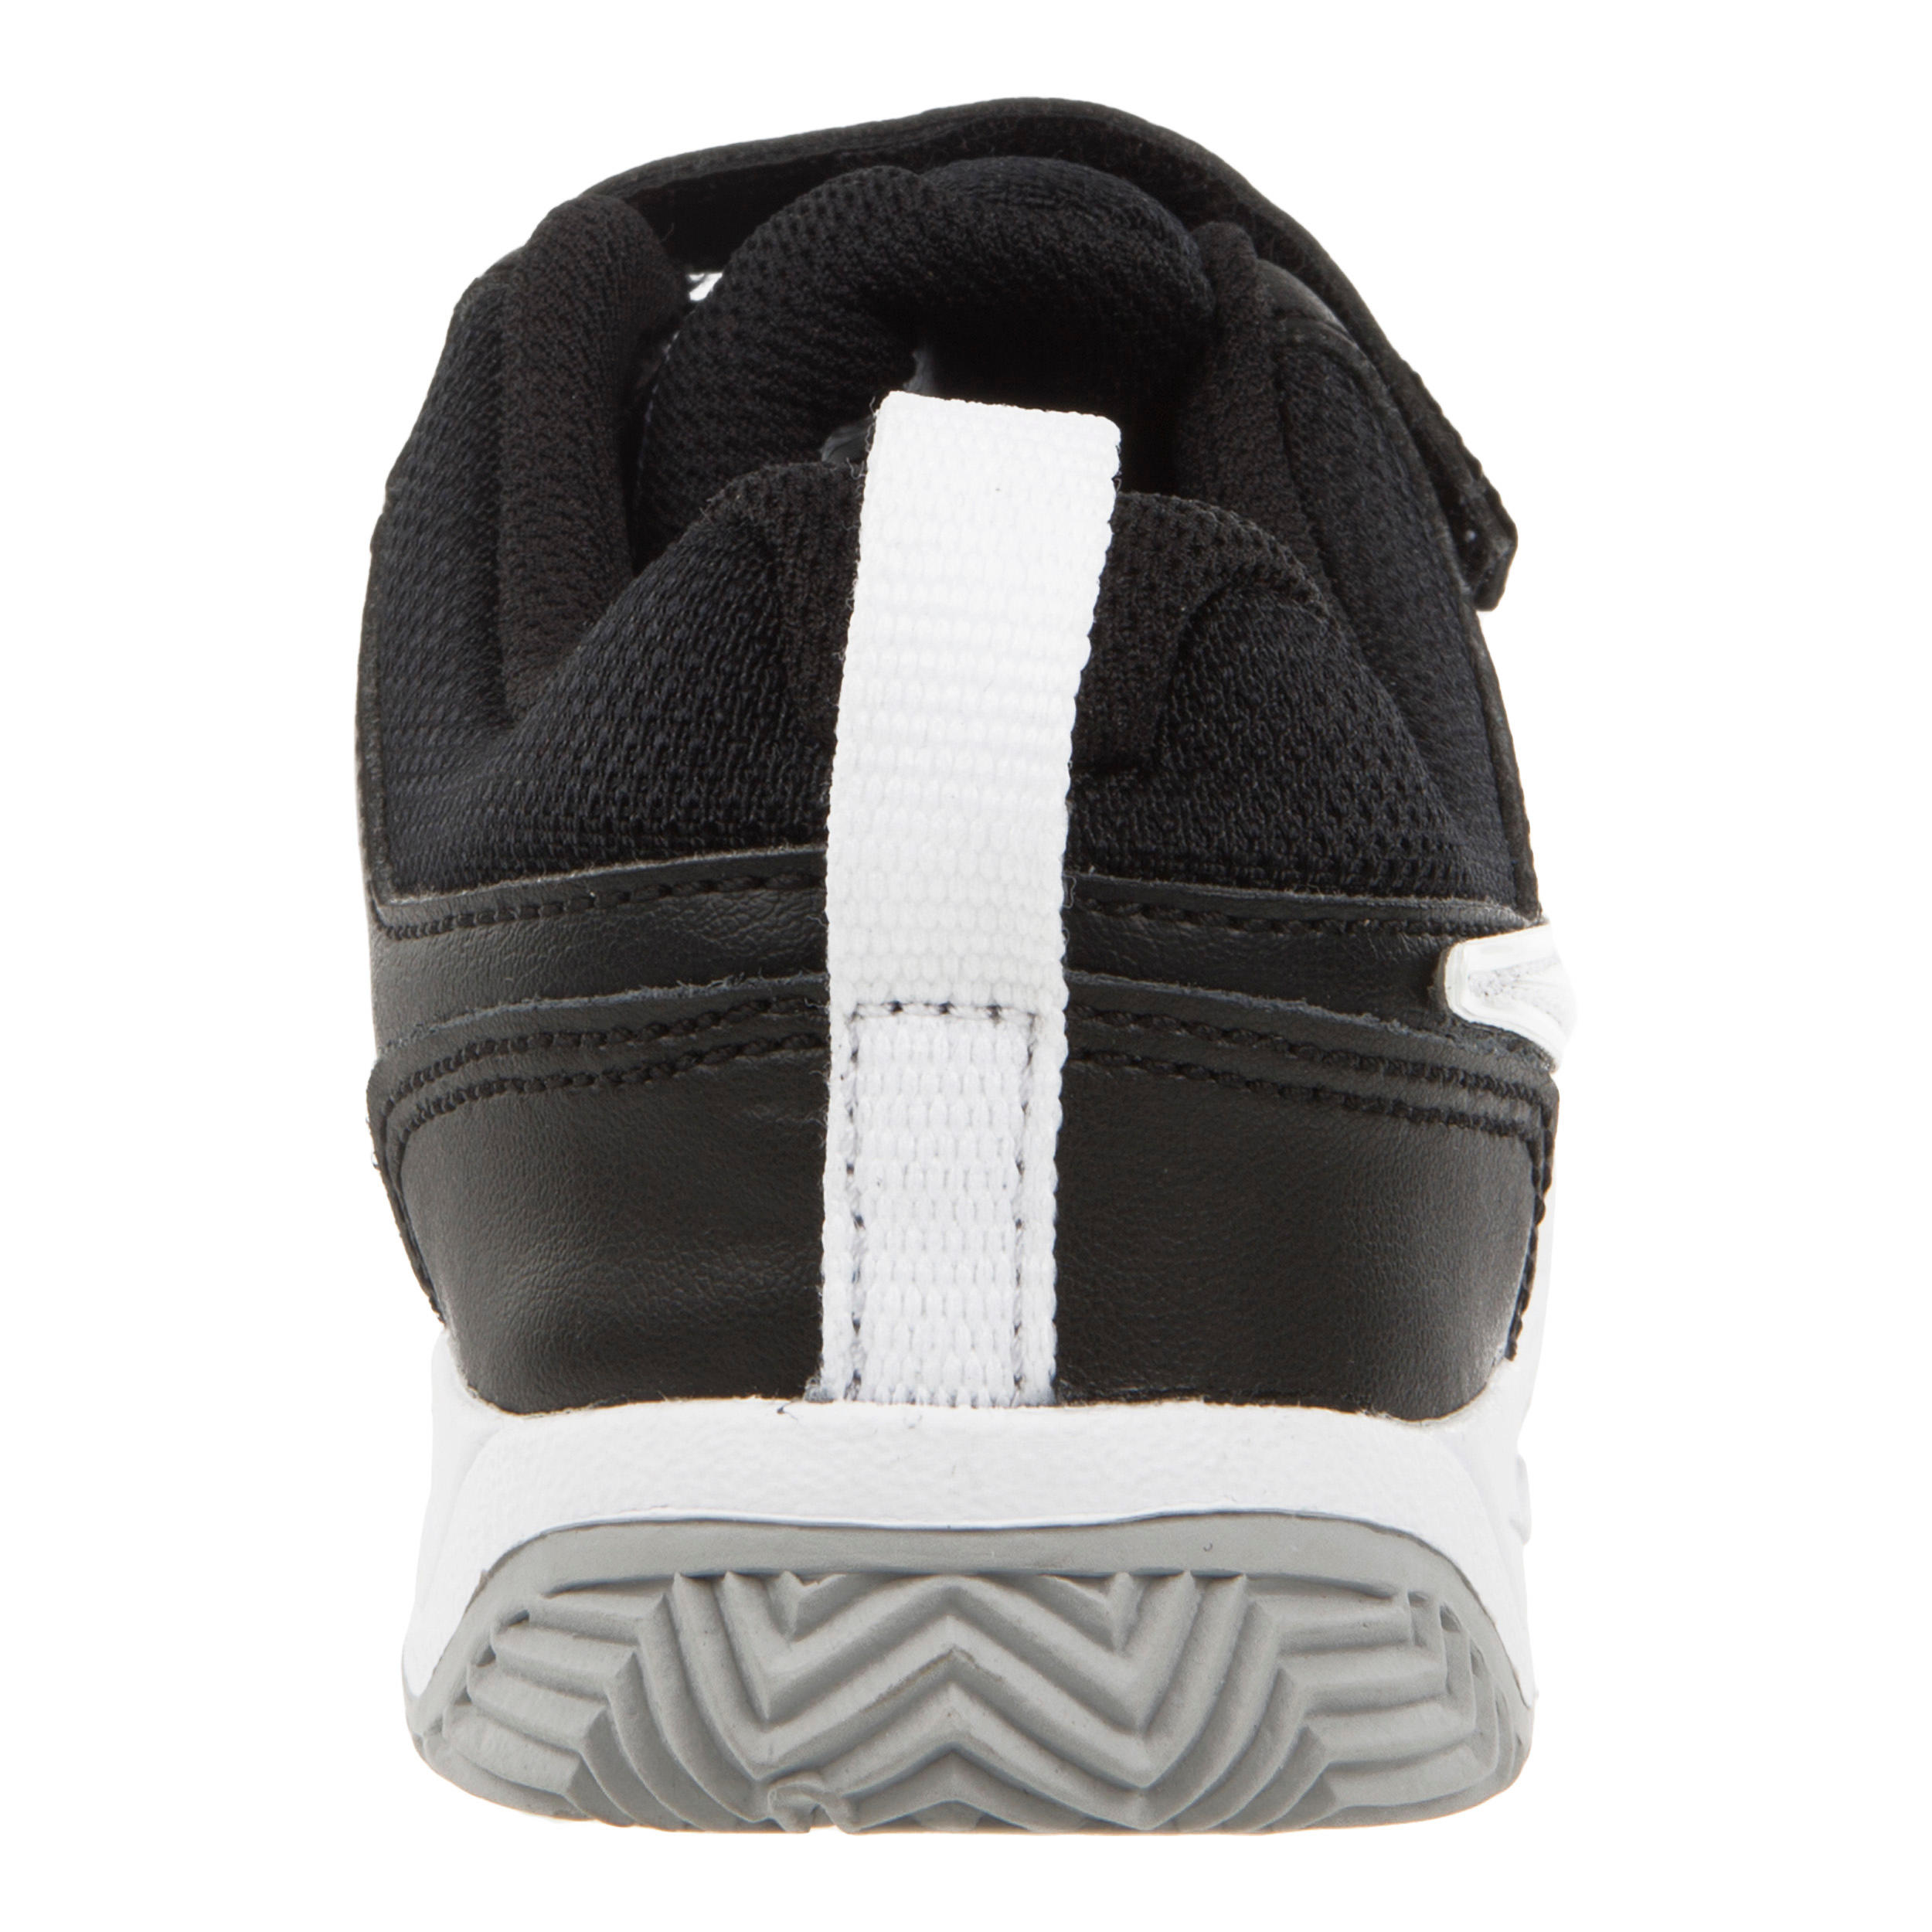 Lykin Kids' Tennis Shoes - Black 5/8